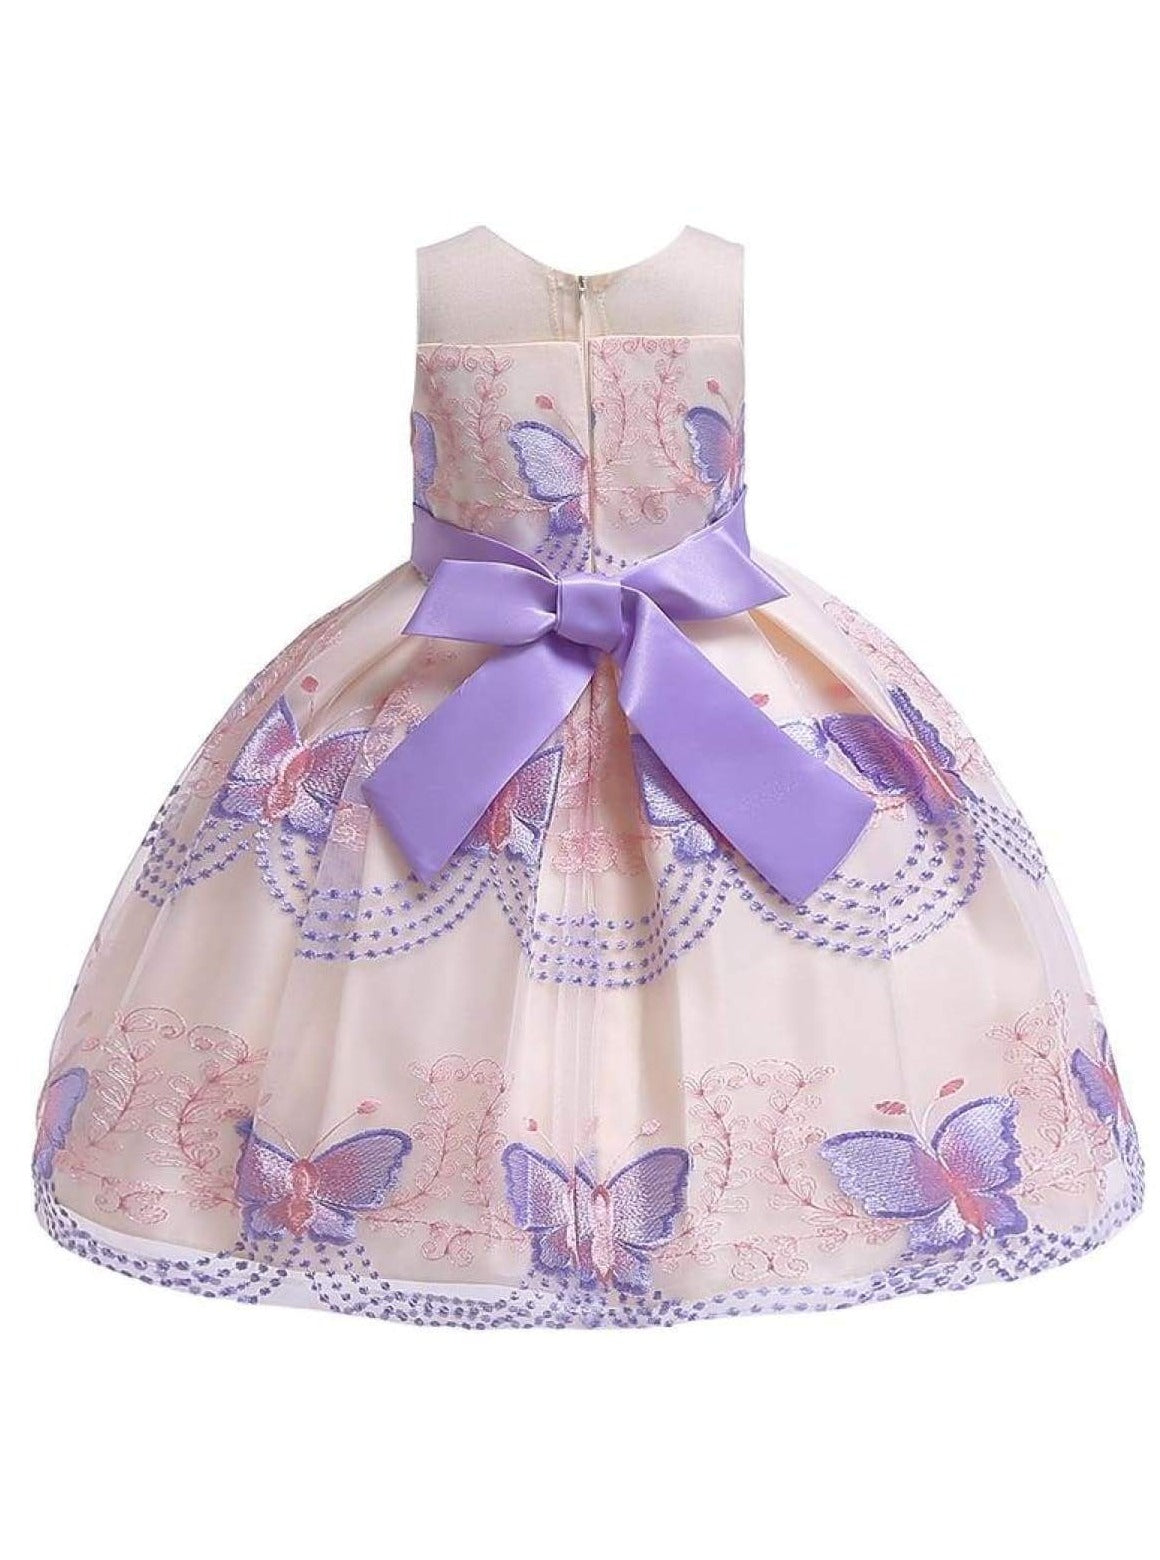 Toddler Spring Dresses | Girls Sleeveless Butterfly Embroidery Dress 